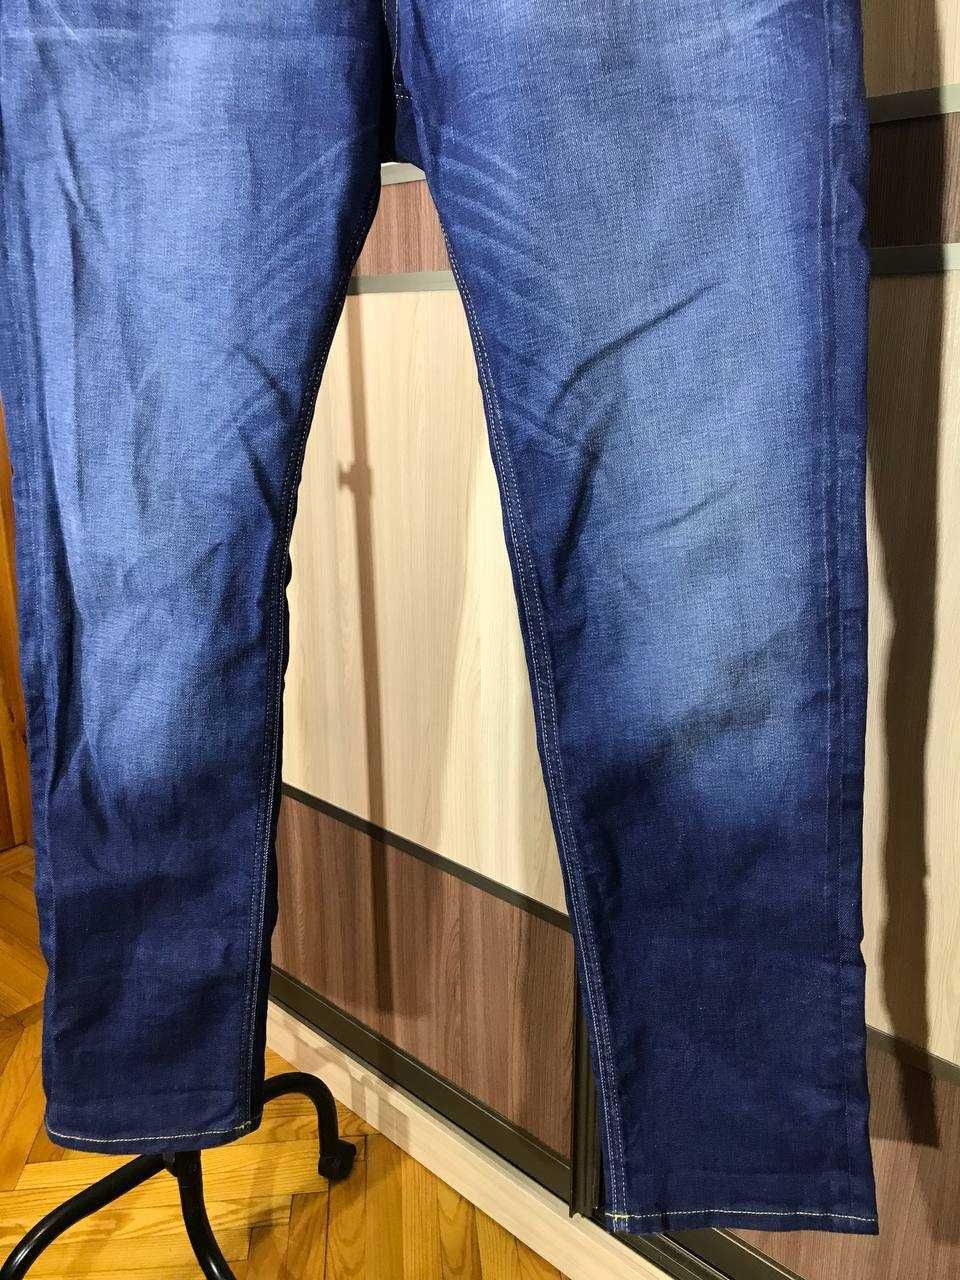 Мужские джинсы штаны Jack & Jones Slim/Straight Size 33/32 оригинал